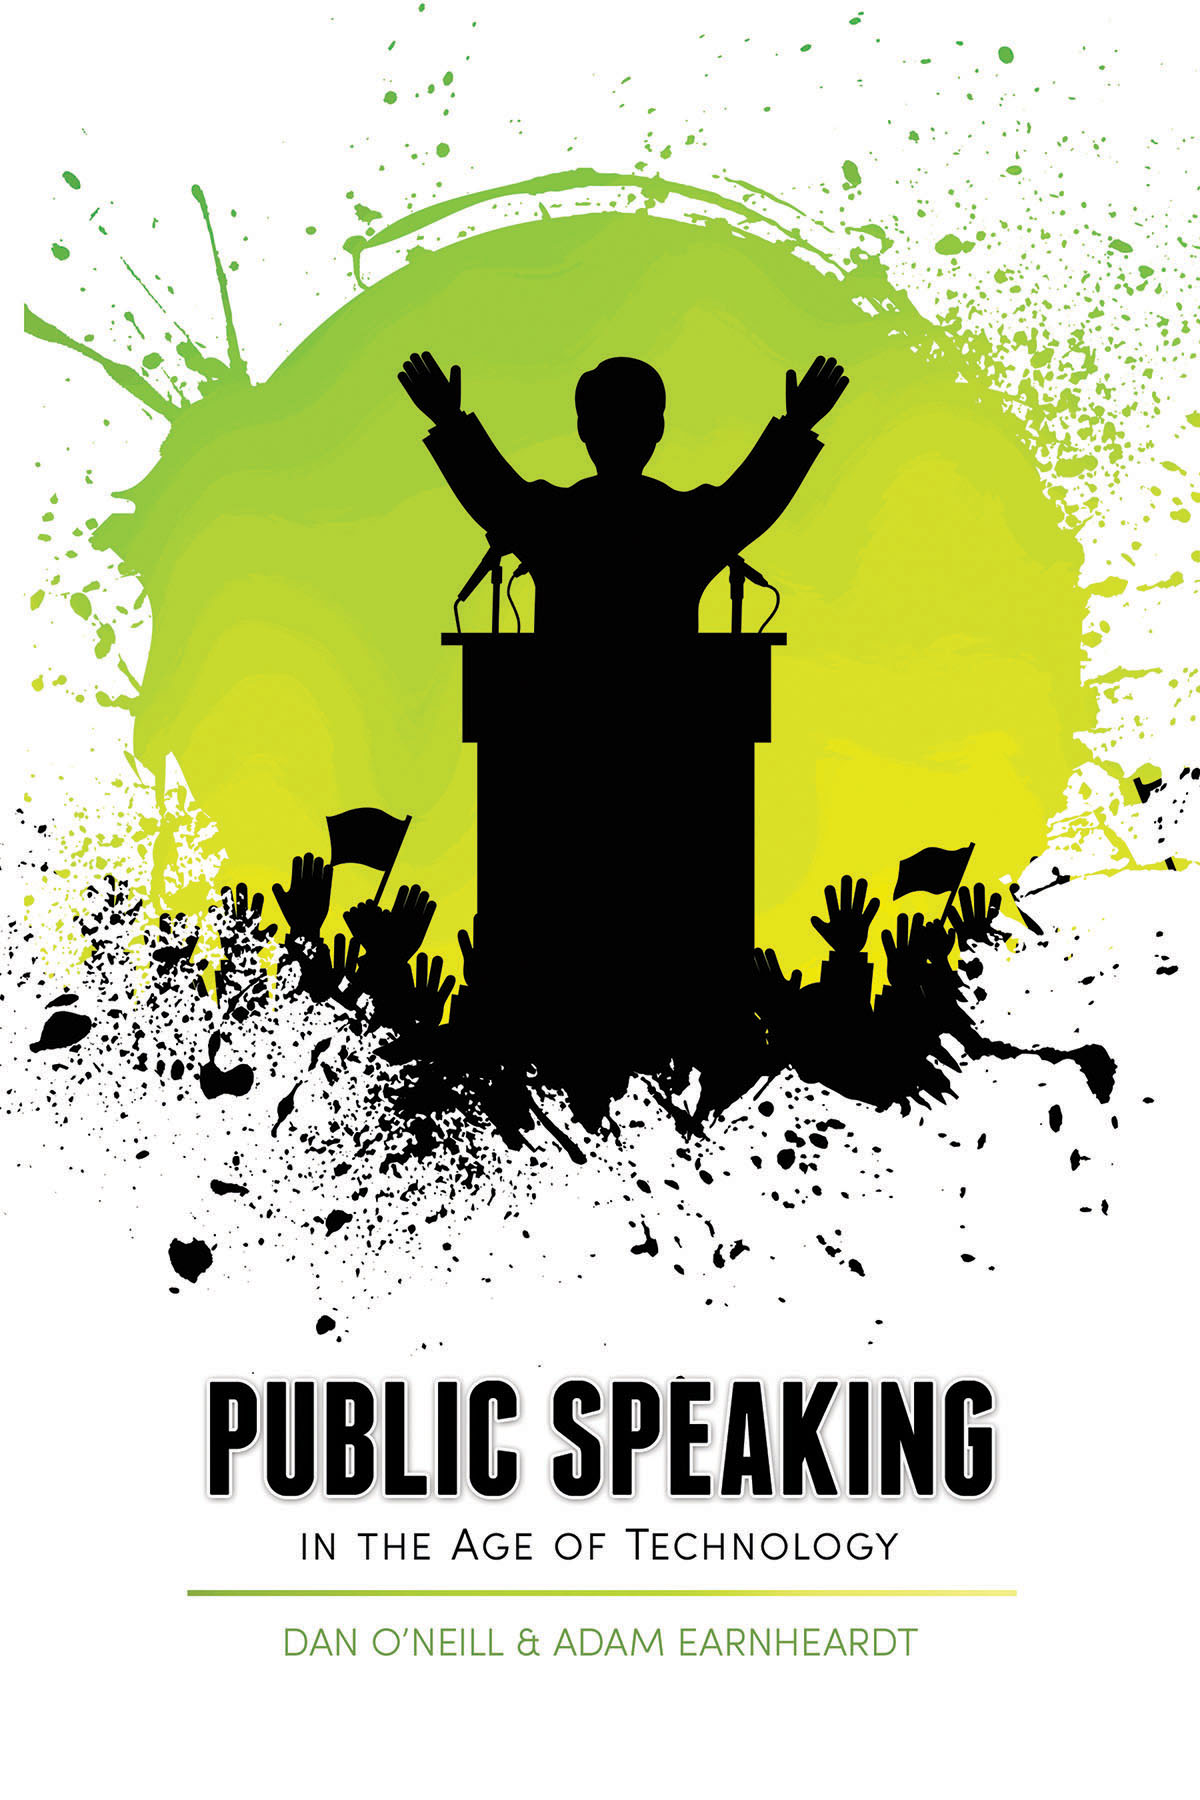 Public Speaking in the Age of Technology, by Daniel J. O